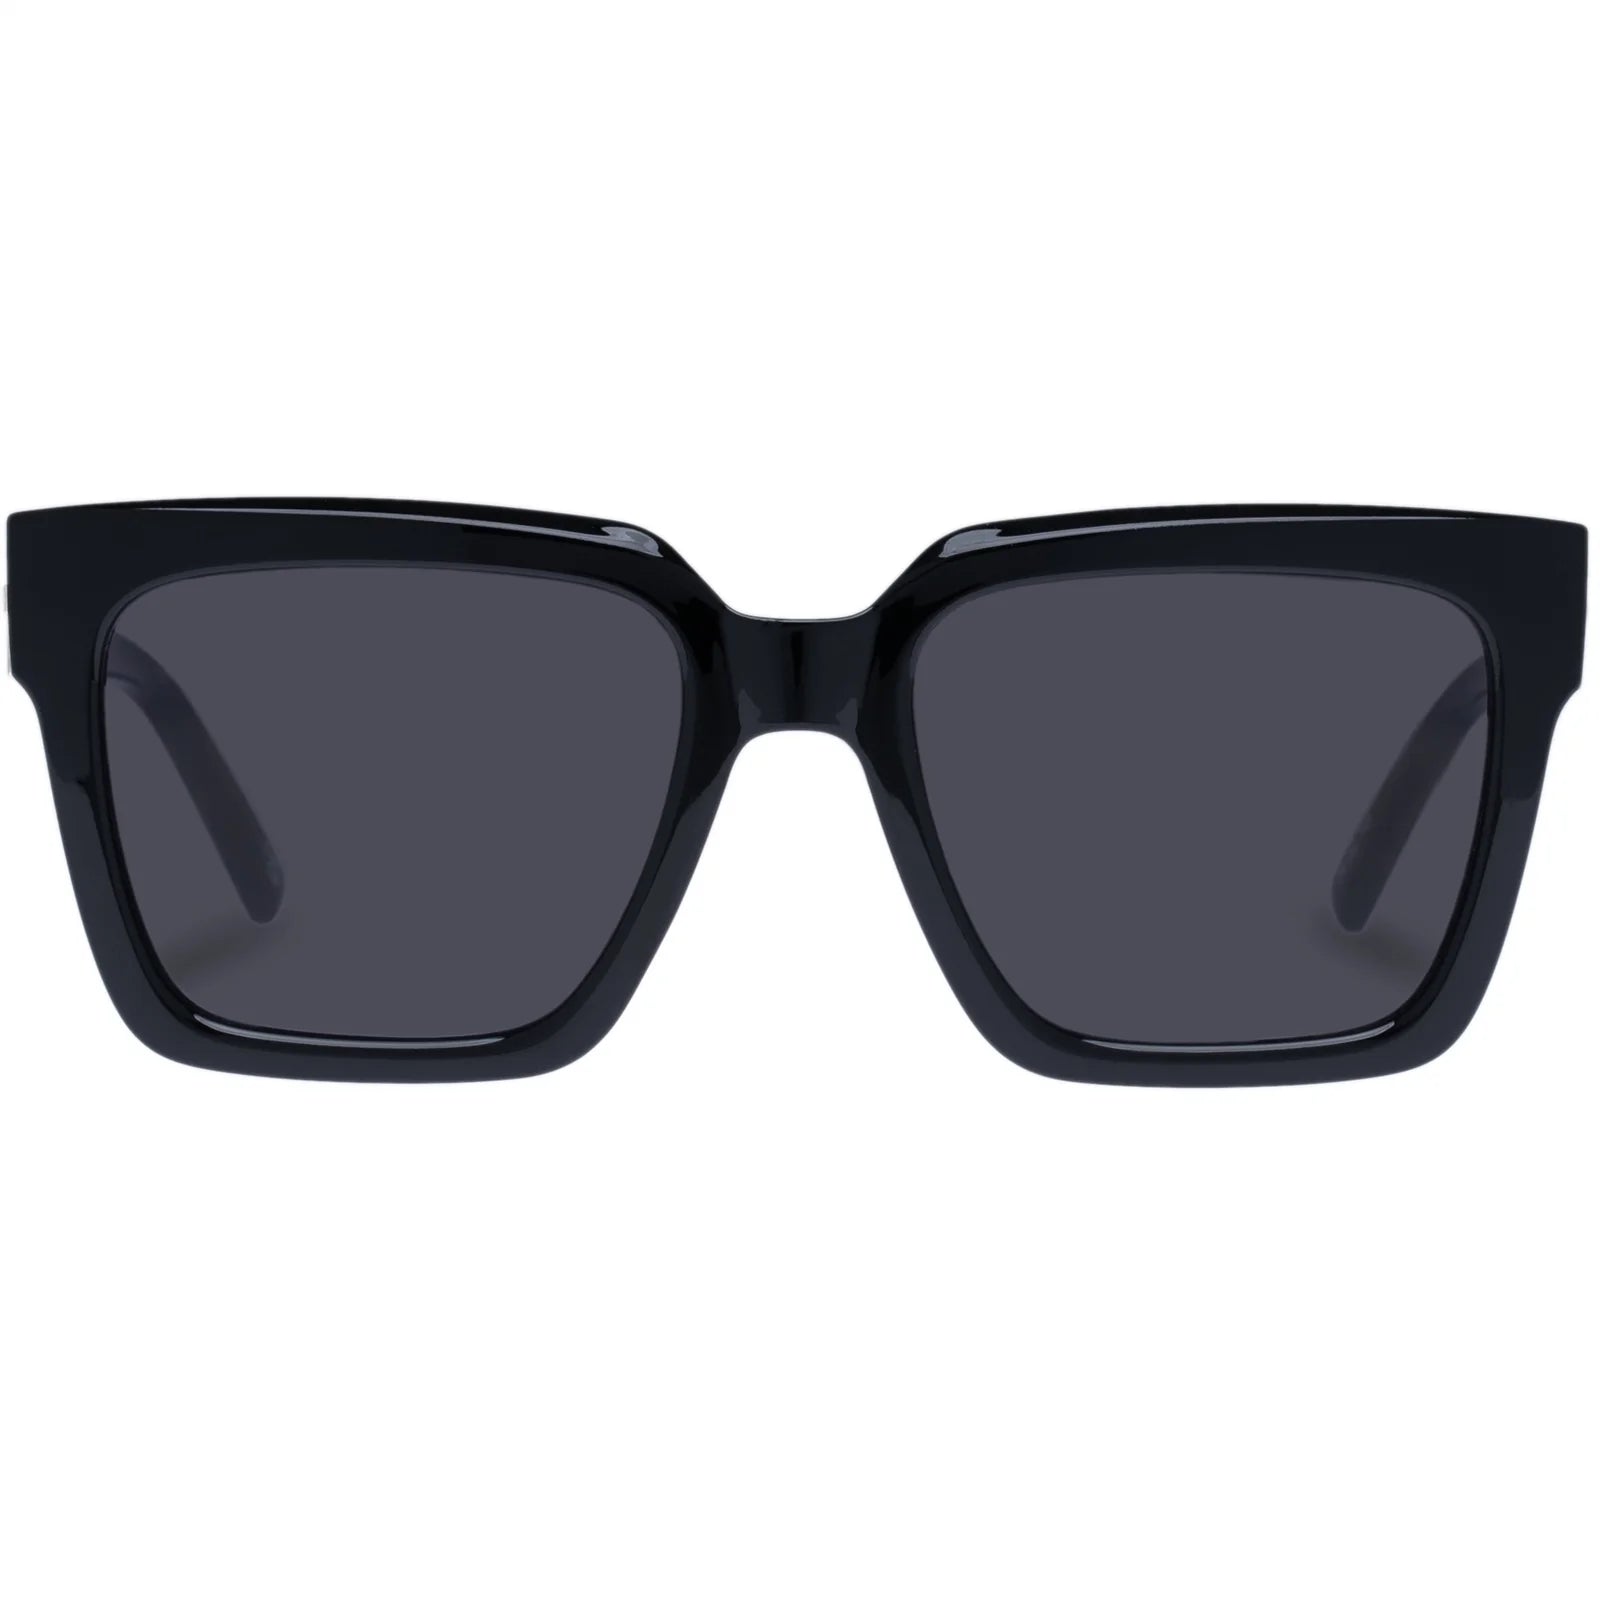 Le Specs Sunglasses Trampler - Black